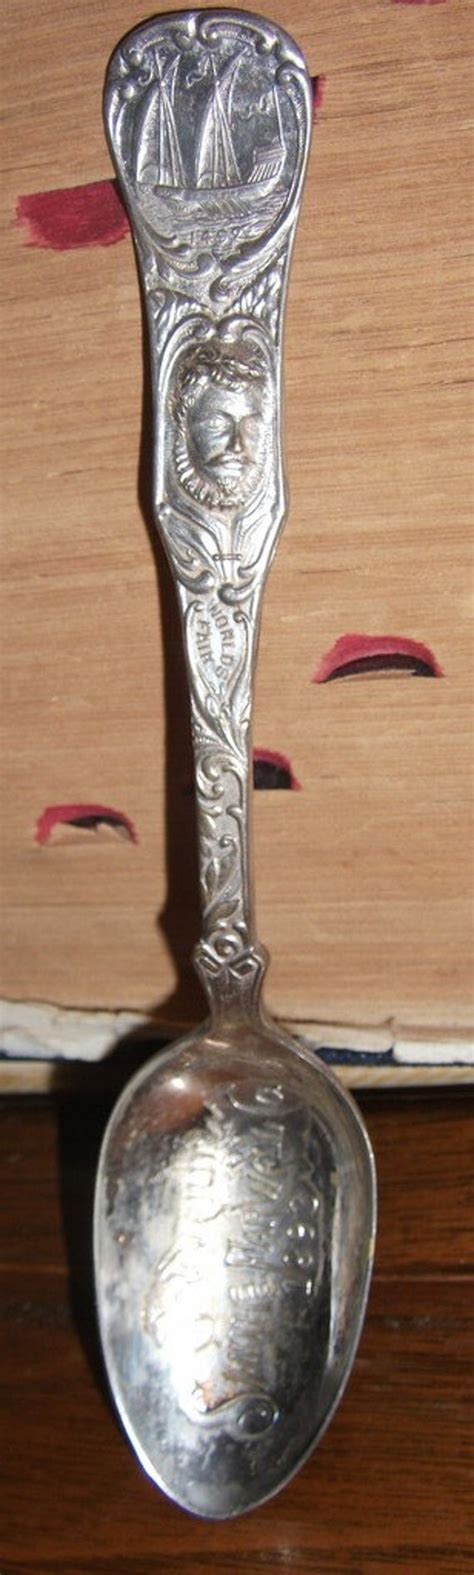 Antique Souvenir Spoon 1893 Worlds Fair Sterling Silver